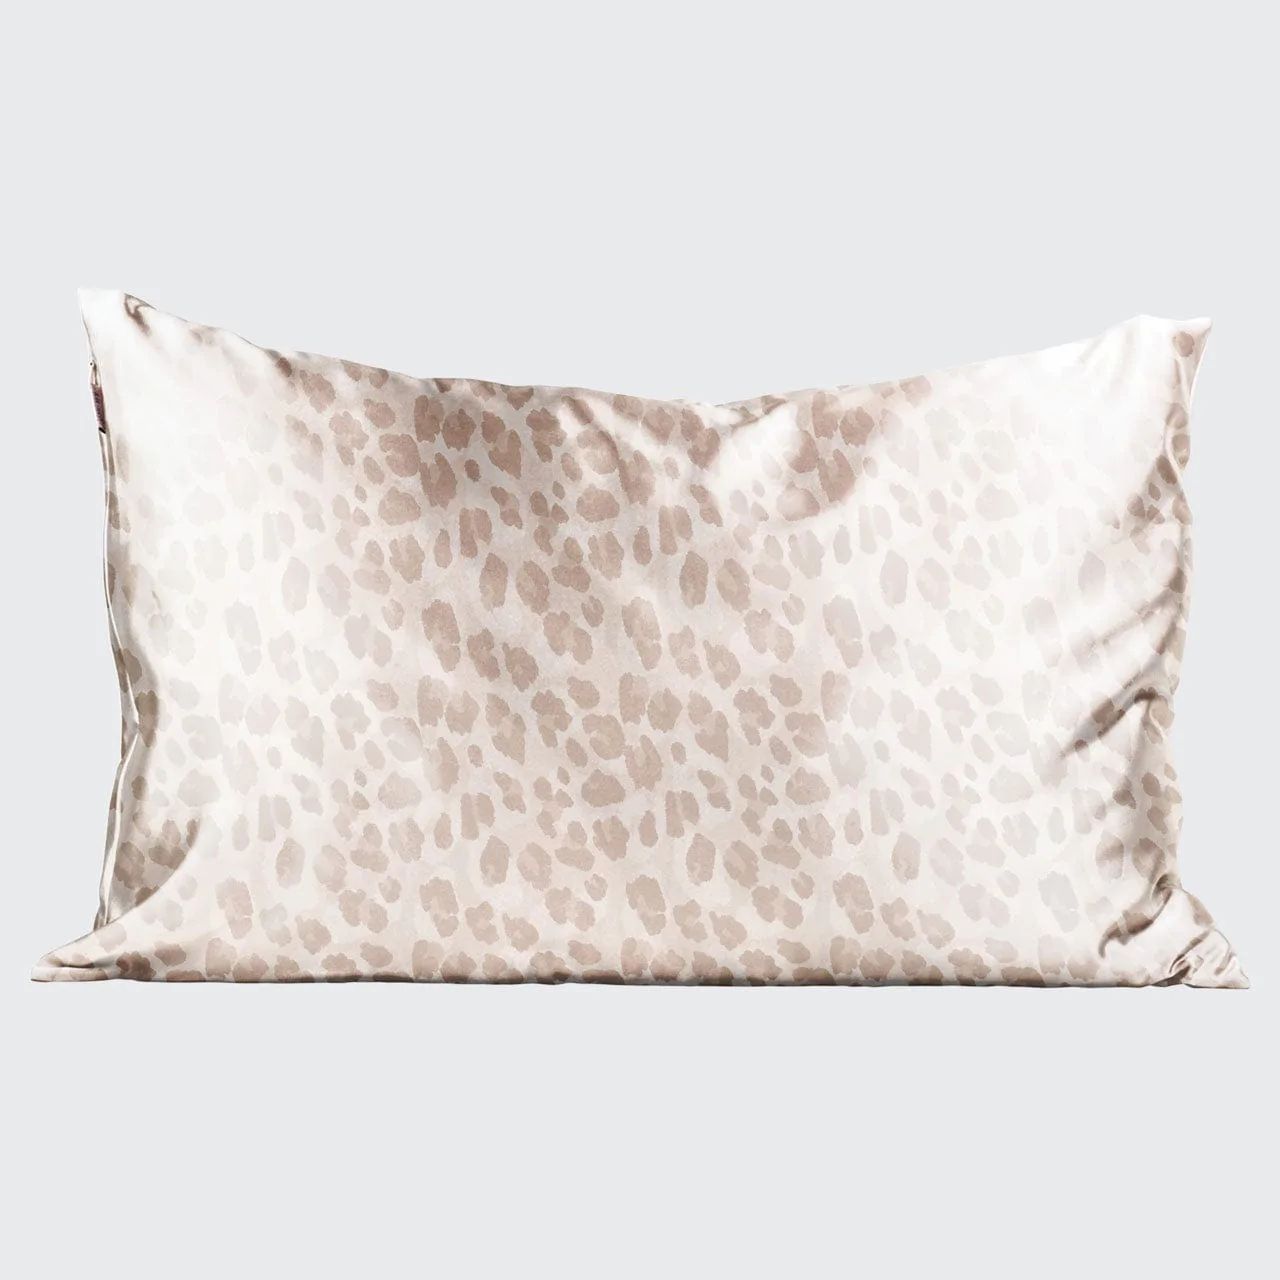 Satin Pillowcase in Leopard | Kitsch